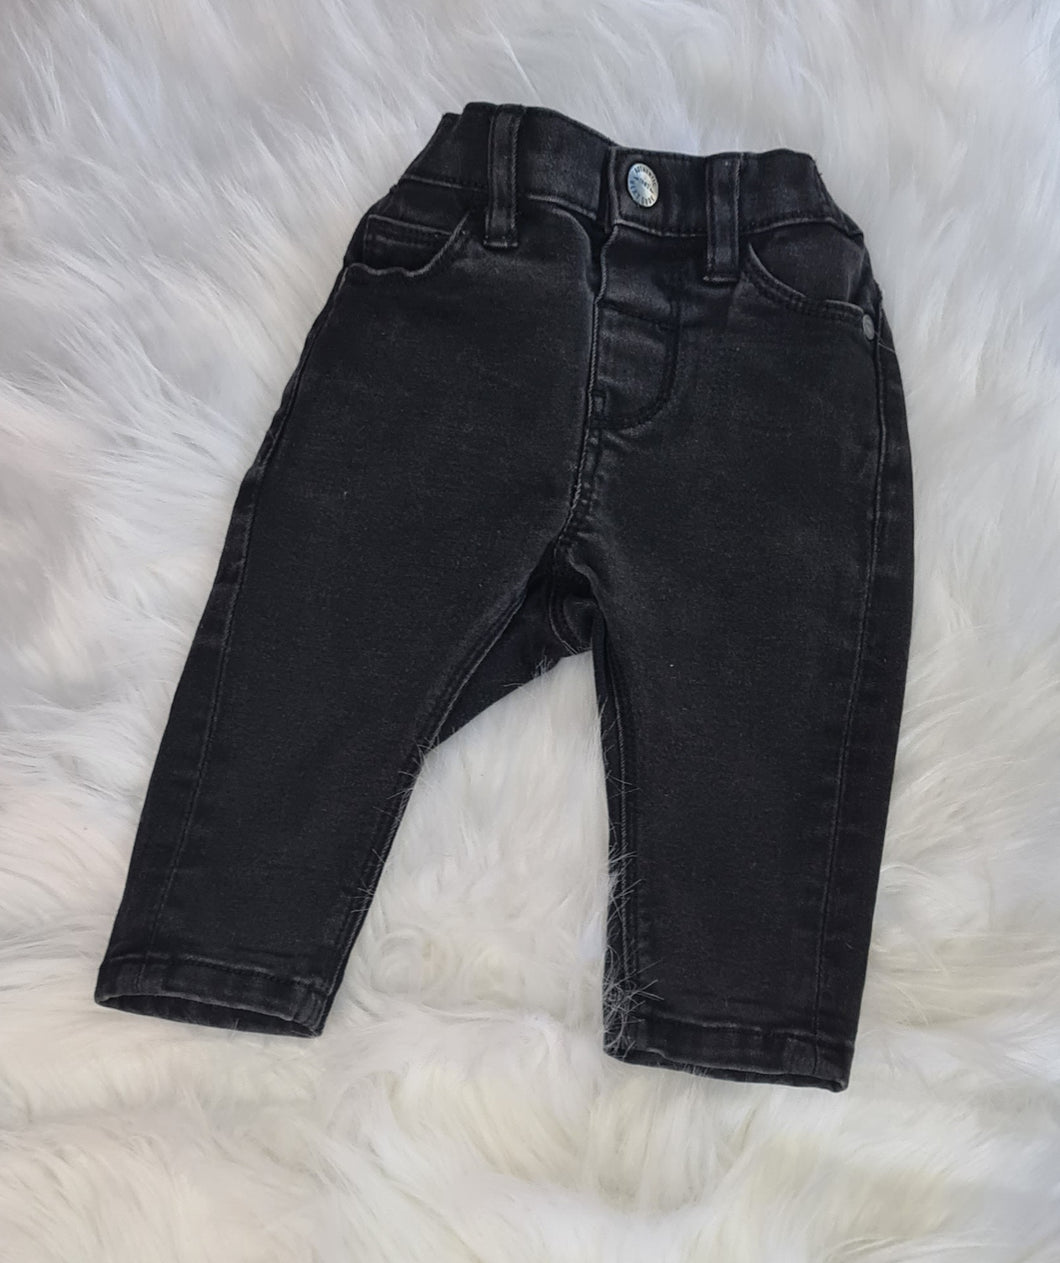 Boys 3-6 Months - Black Jeans